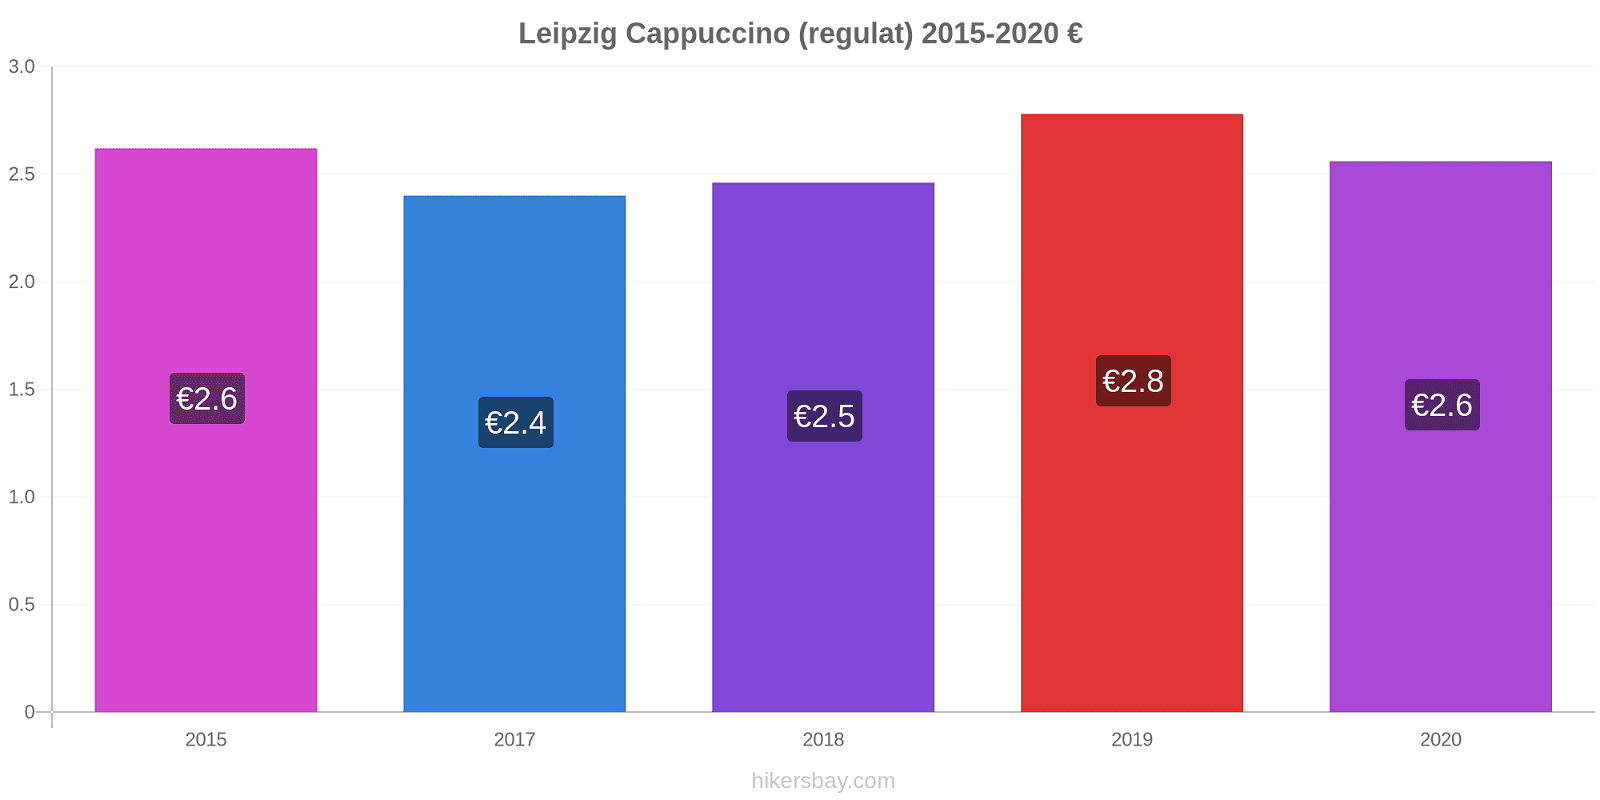 Leipzig modificări de preț Cappuccino (regulat) hikersbay.com